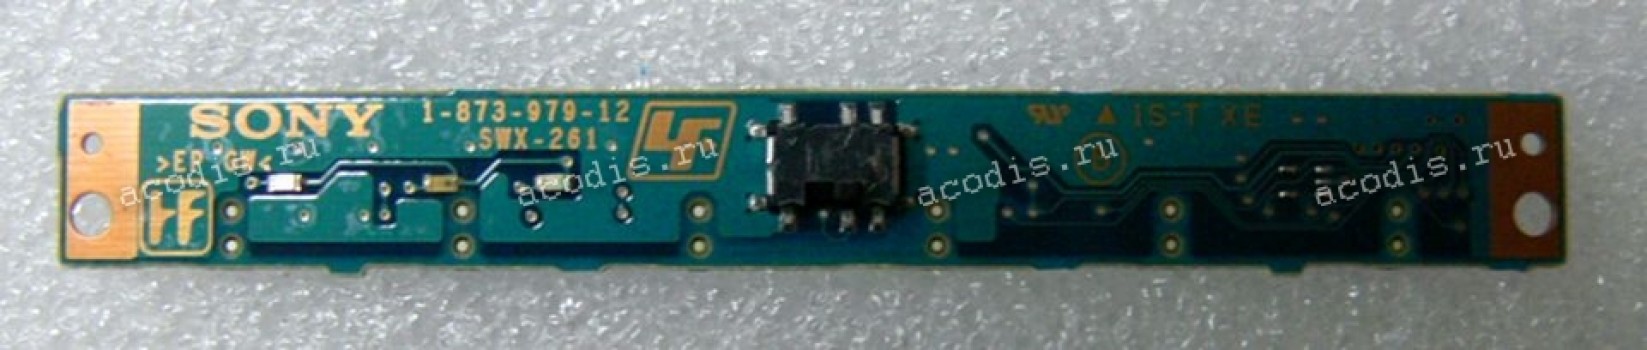 Button board Sony VGN-TZ (p/n: 1-873-979-12)